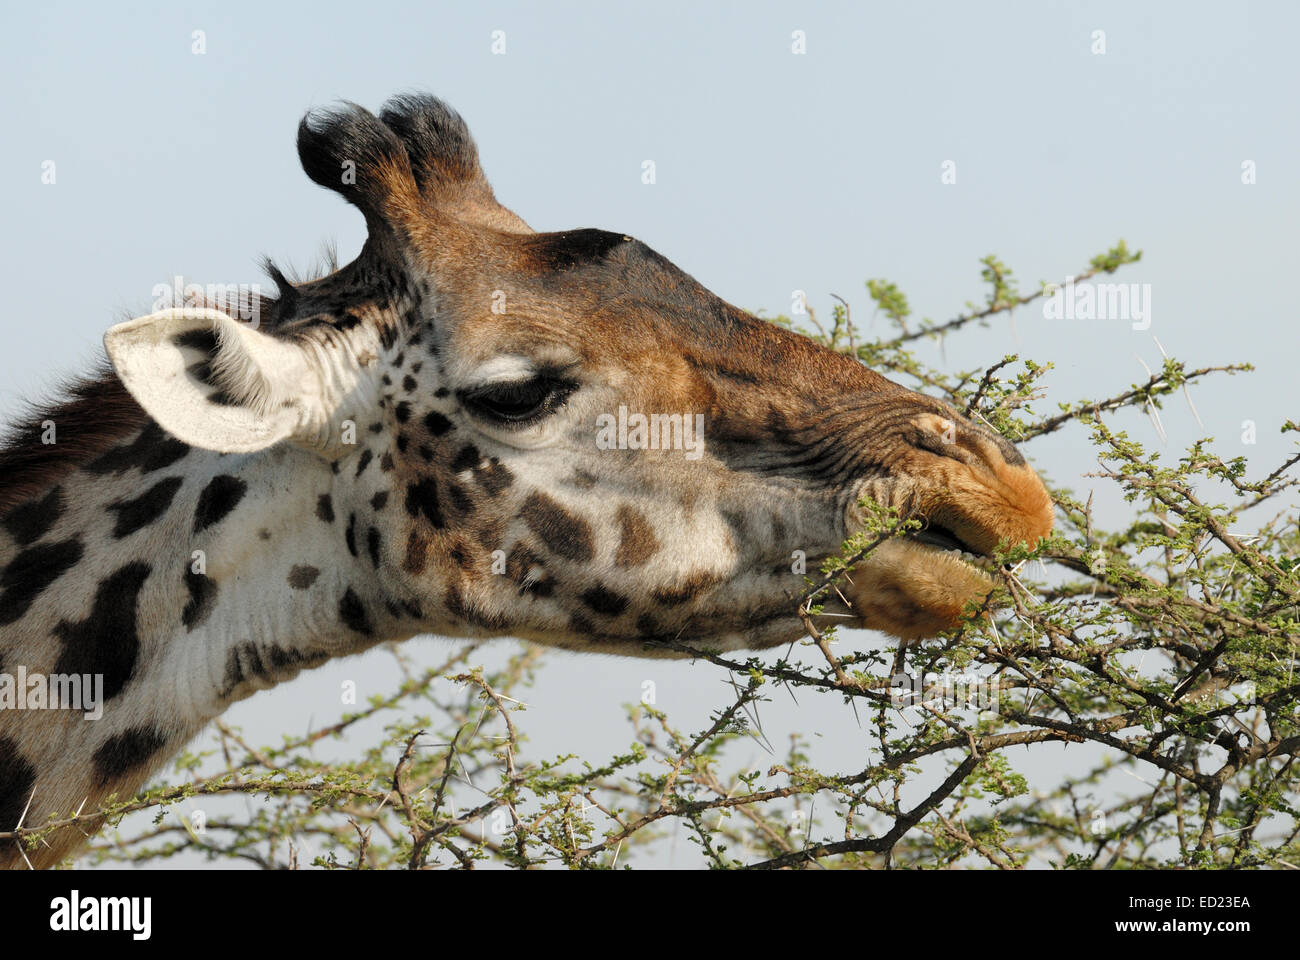 Giraffe (Giraffa camelopardalis) eating from a Acacia tree (Acacia tortilis), Serengeti national park, Tanzania. Stock Photo